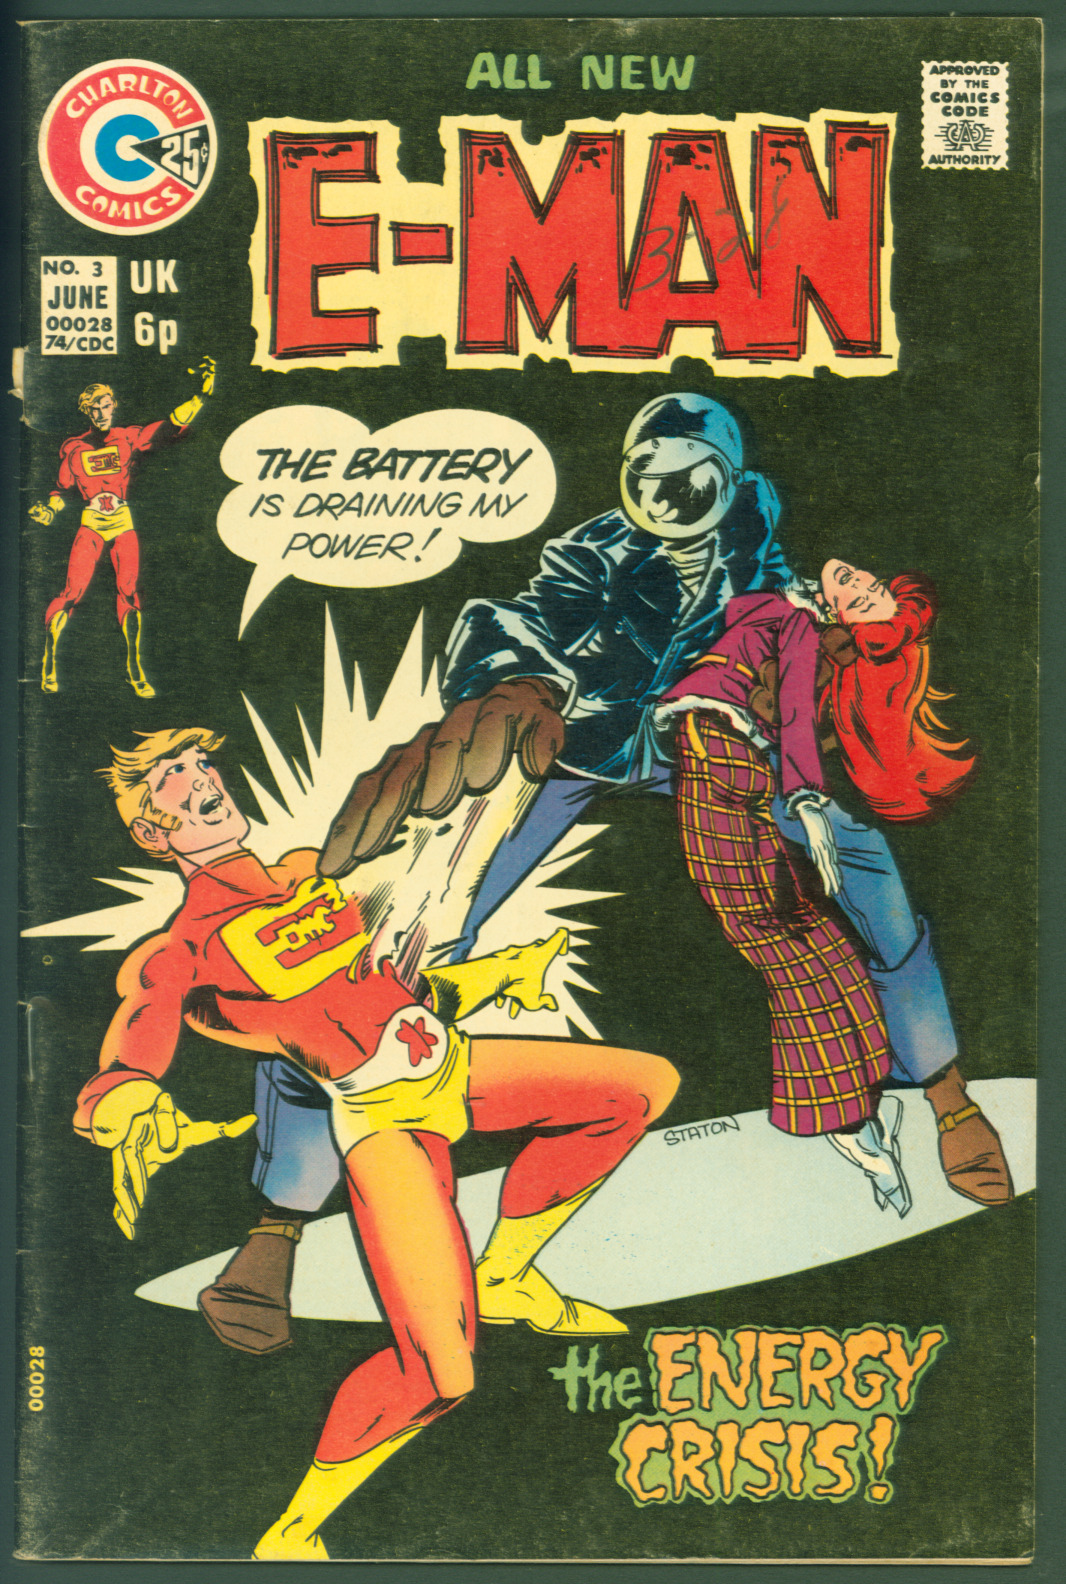 VTG Bronze Age  1974 Charlton Comics E-Man Lot of 7 #3,4,5,6,8,9,10 GD-VF